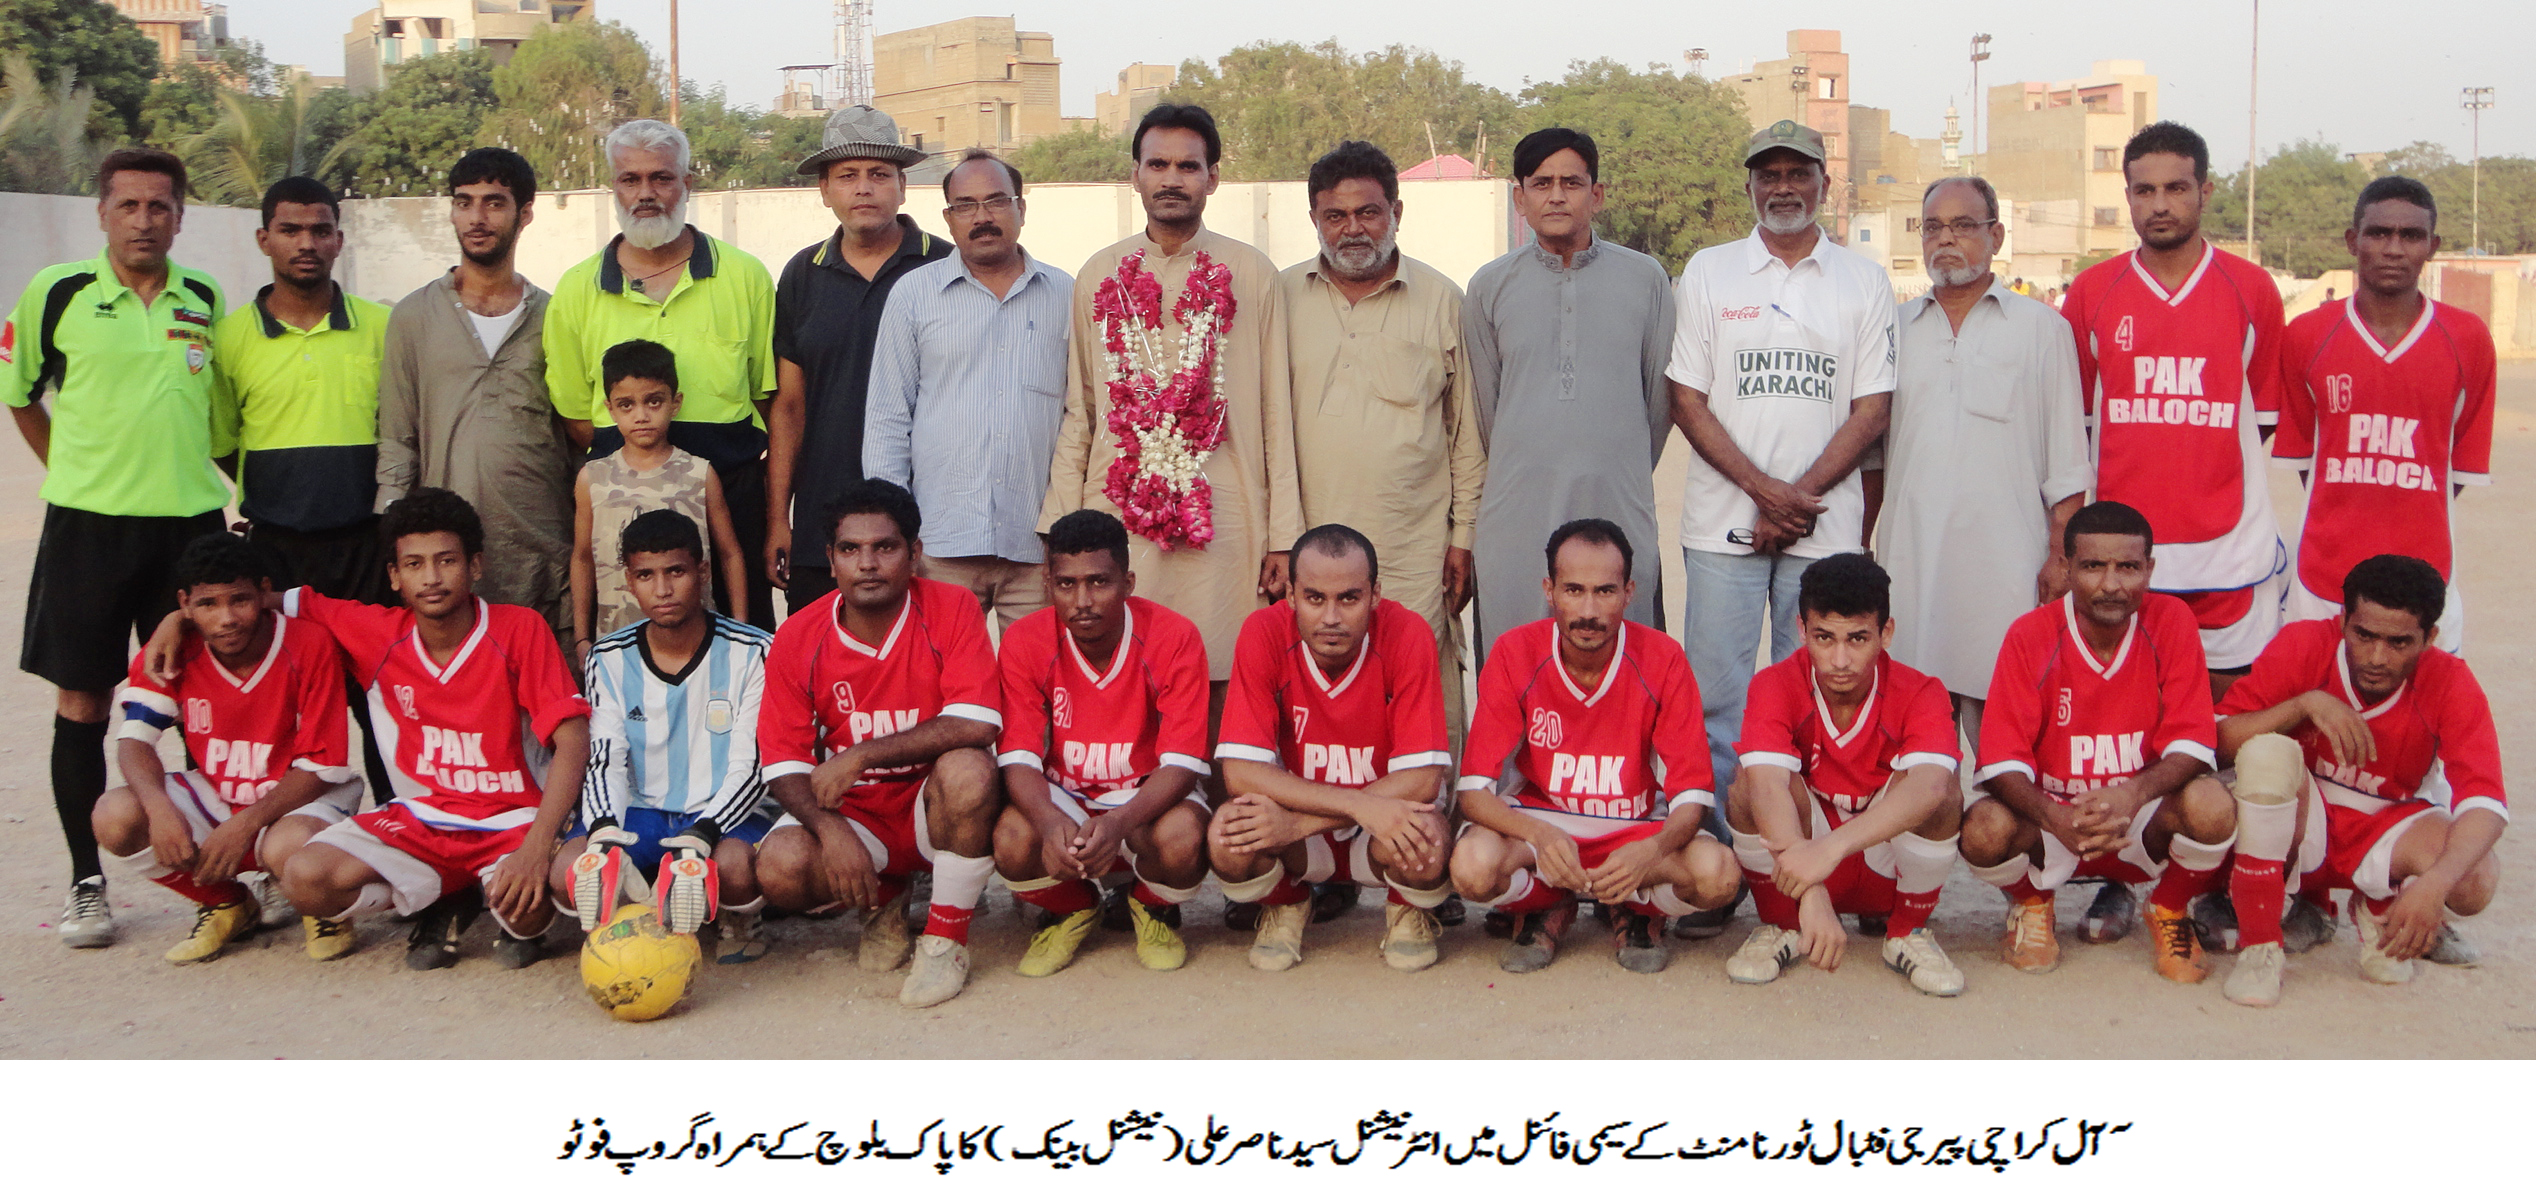 Pir G Football Tournament: Pak Baloch set to face Usman Shaheed FC Keamari in the final